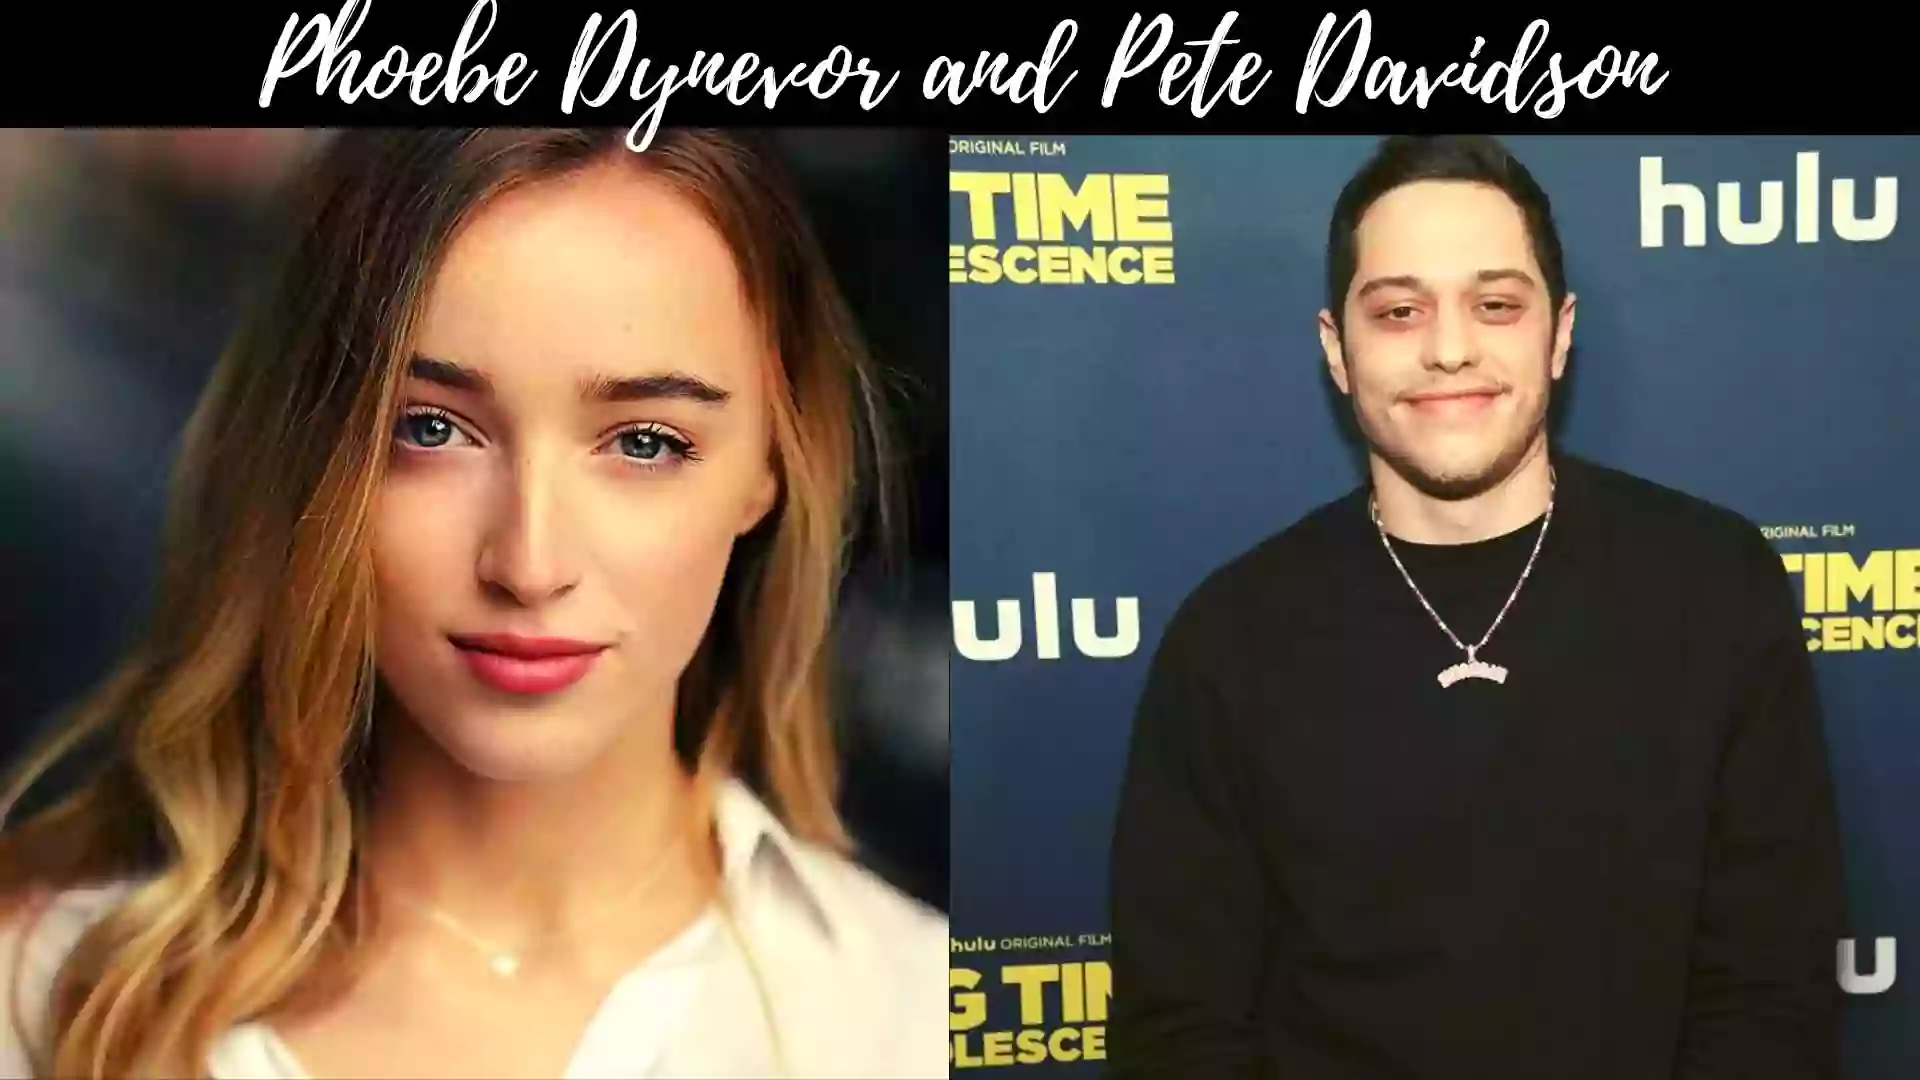 Phoebe Dynevor and Pete Davidson Relationship News 2022